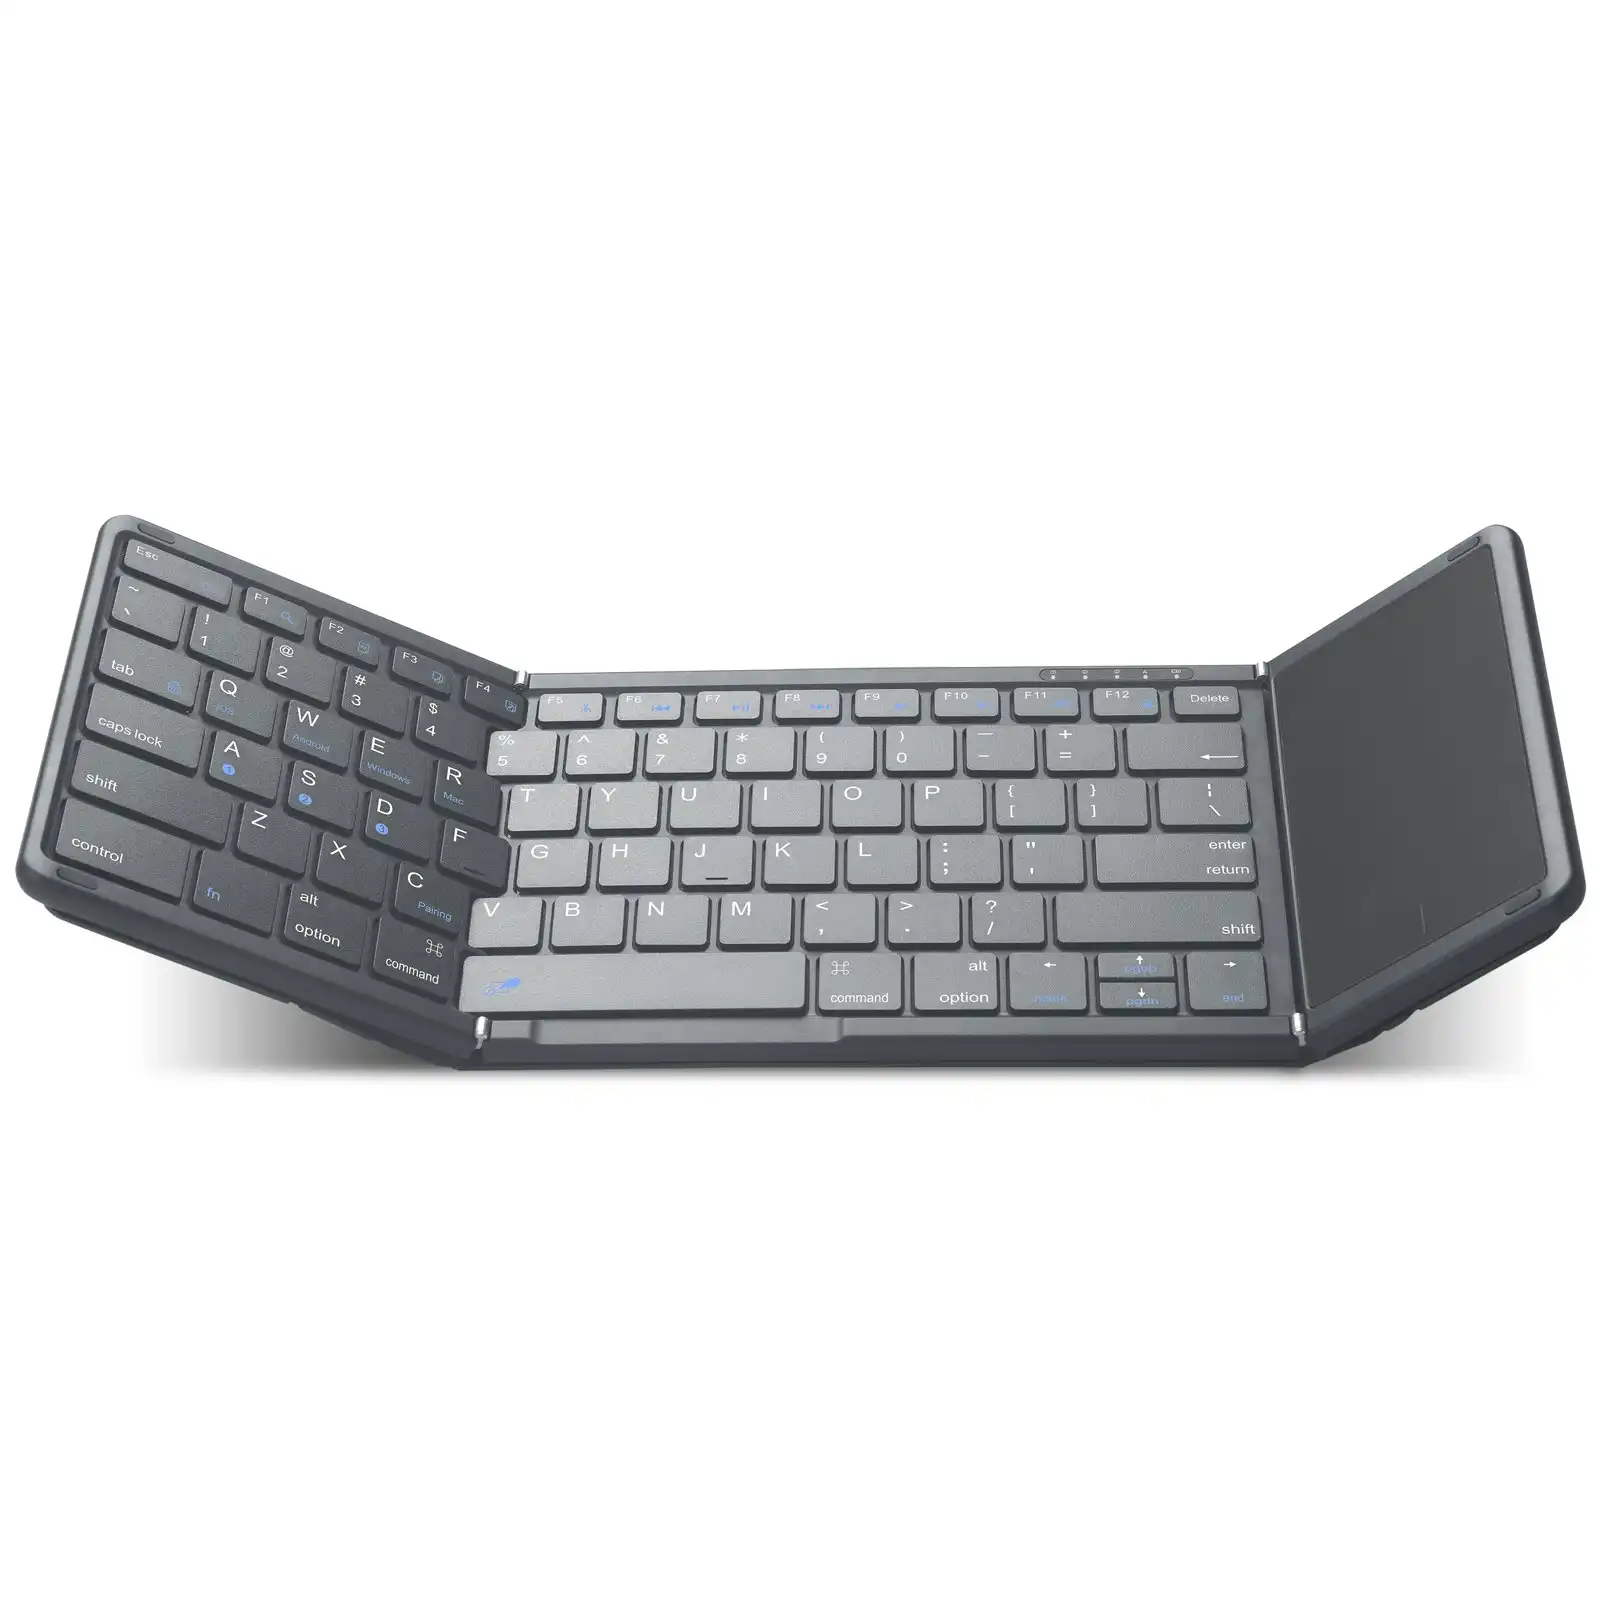 Todo Tri-Folding Bluetooth Wireless Keyboard Touchpad Mouse BT 78 Key Mac Windows Android - Black